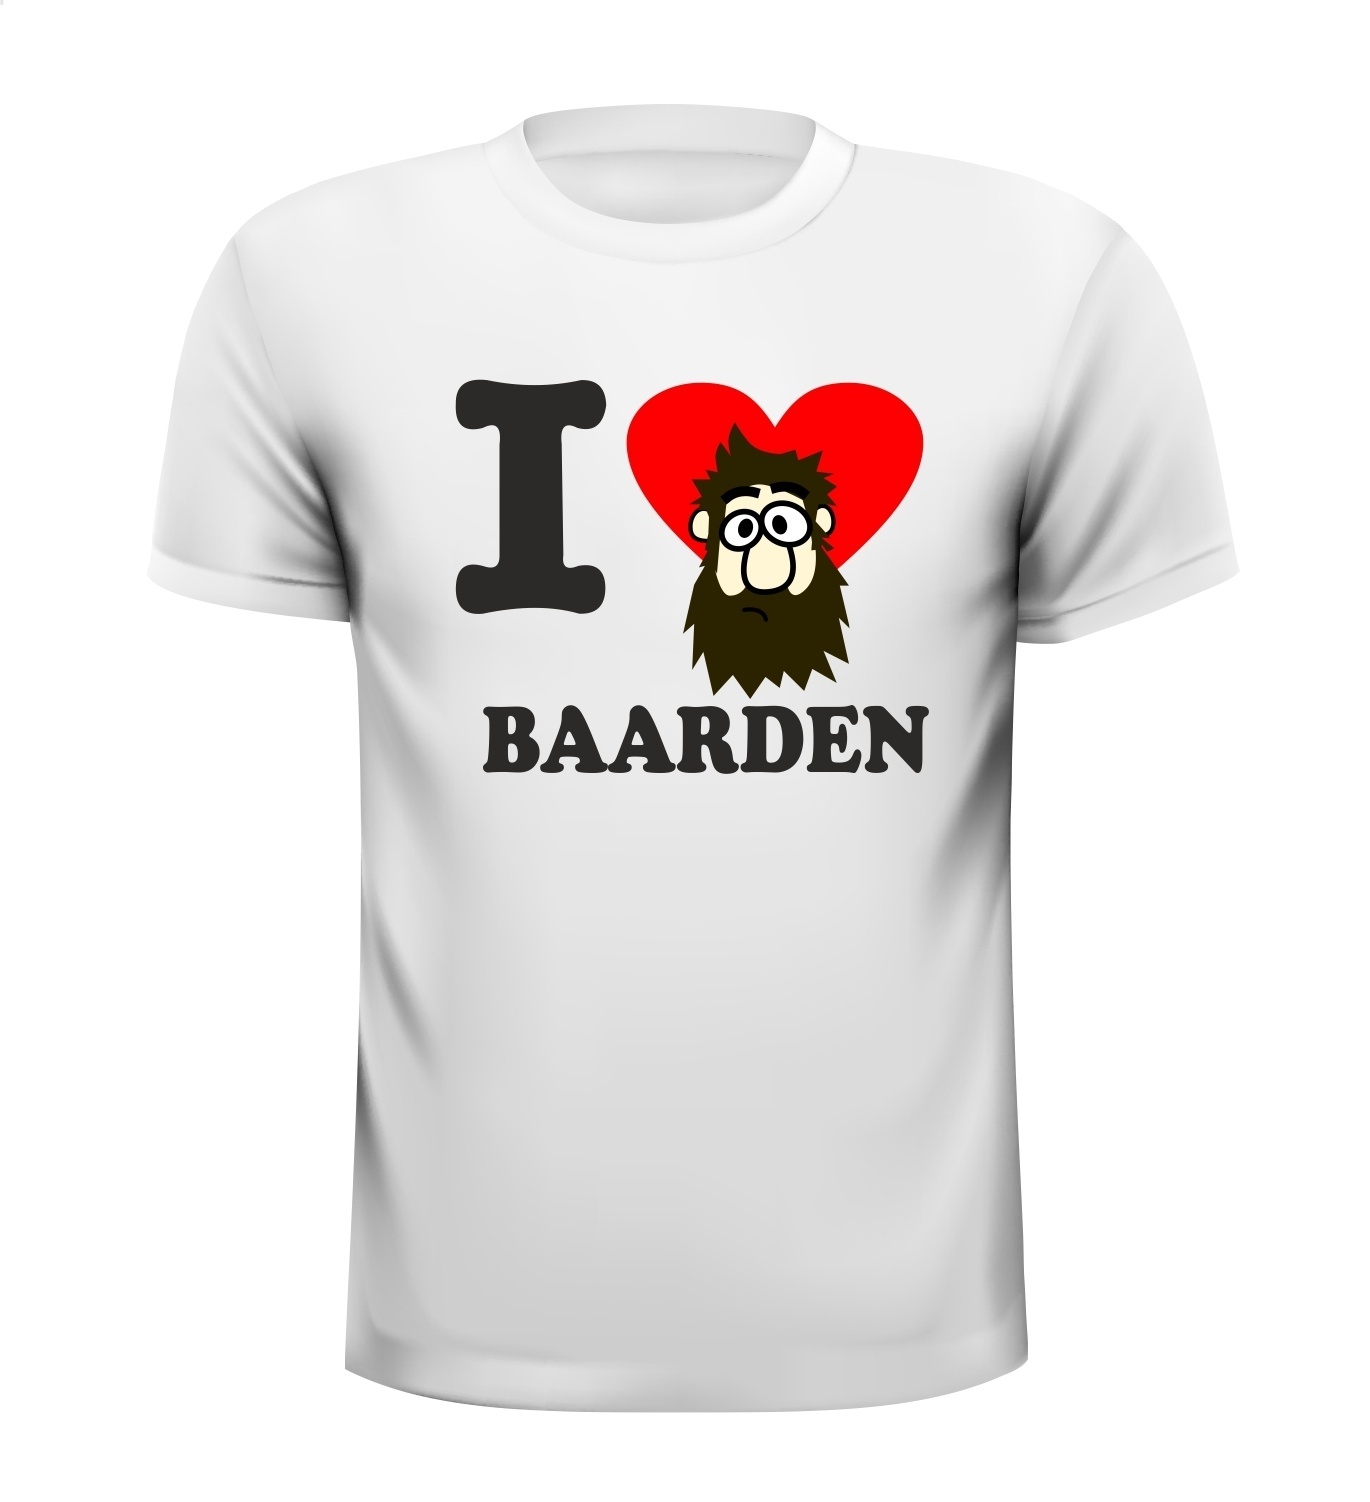 I love baarden T-shirt